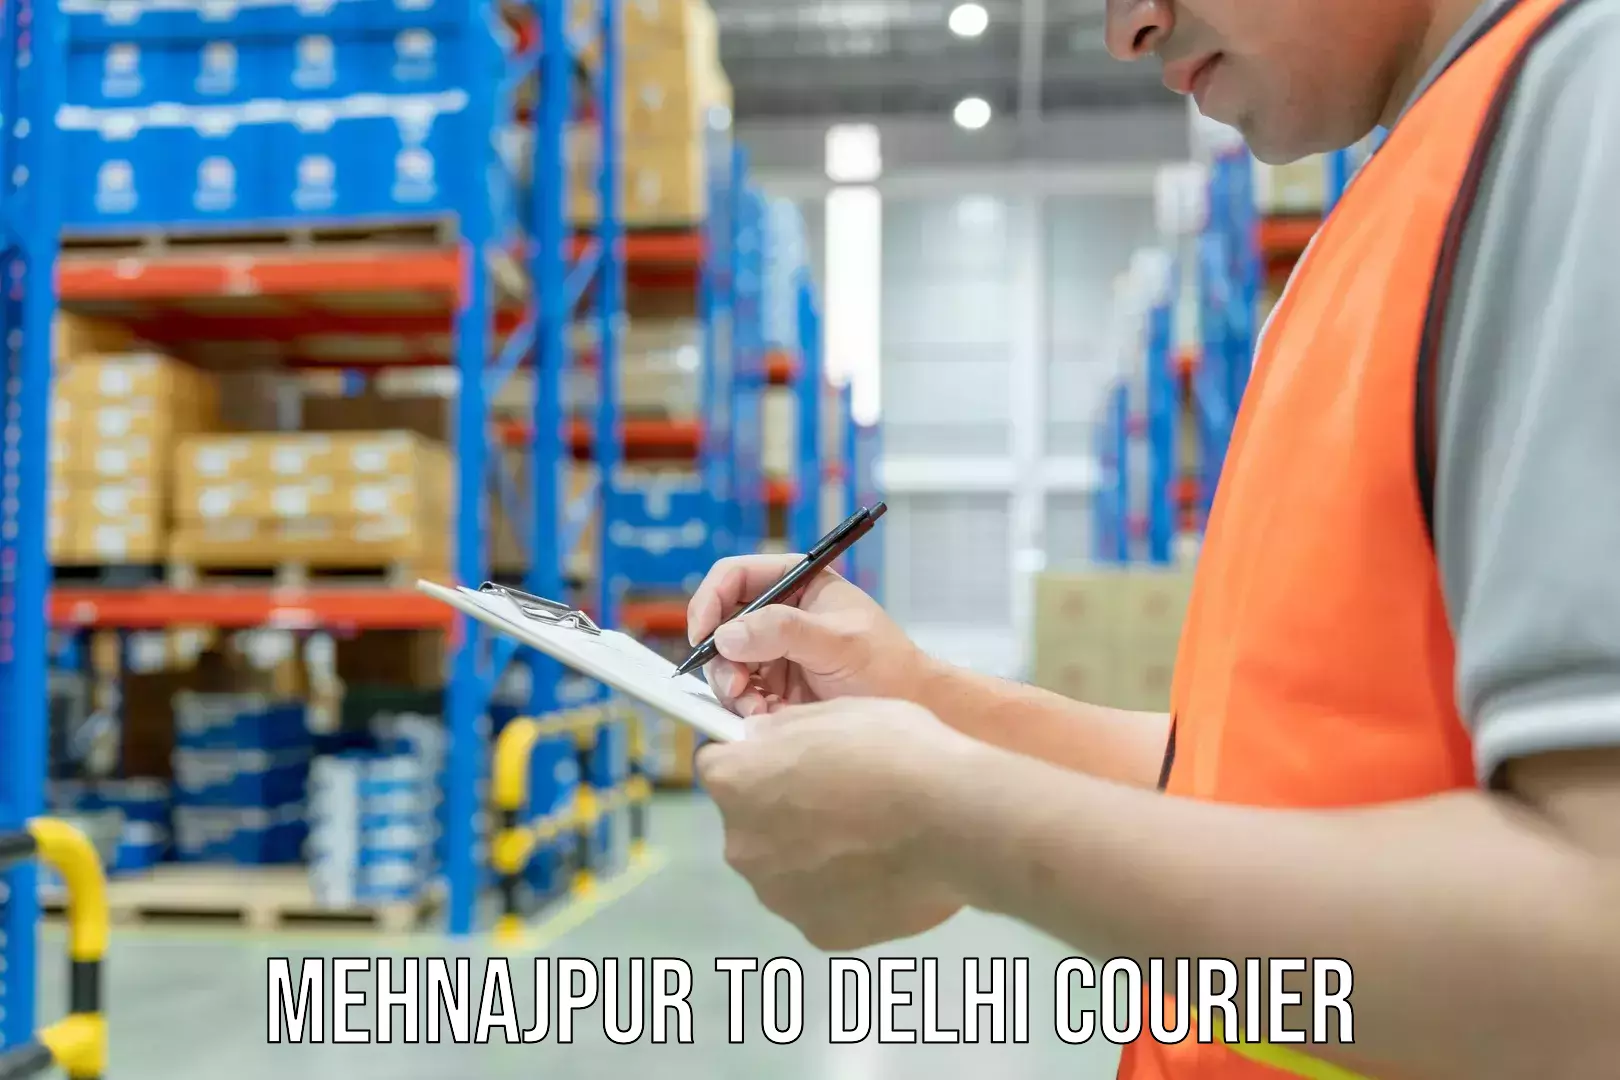 Furniture relocation experts Mehnajpur to Delhi